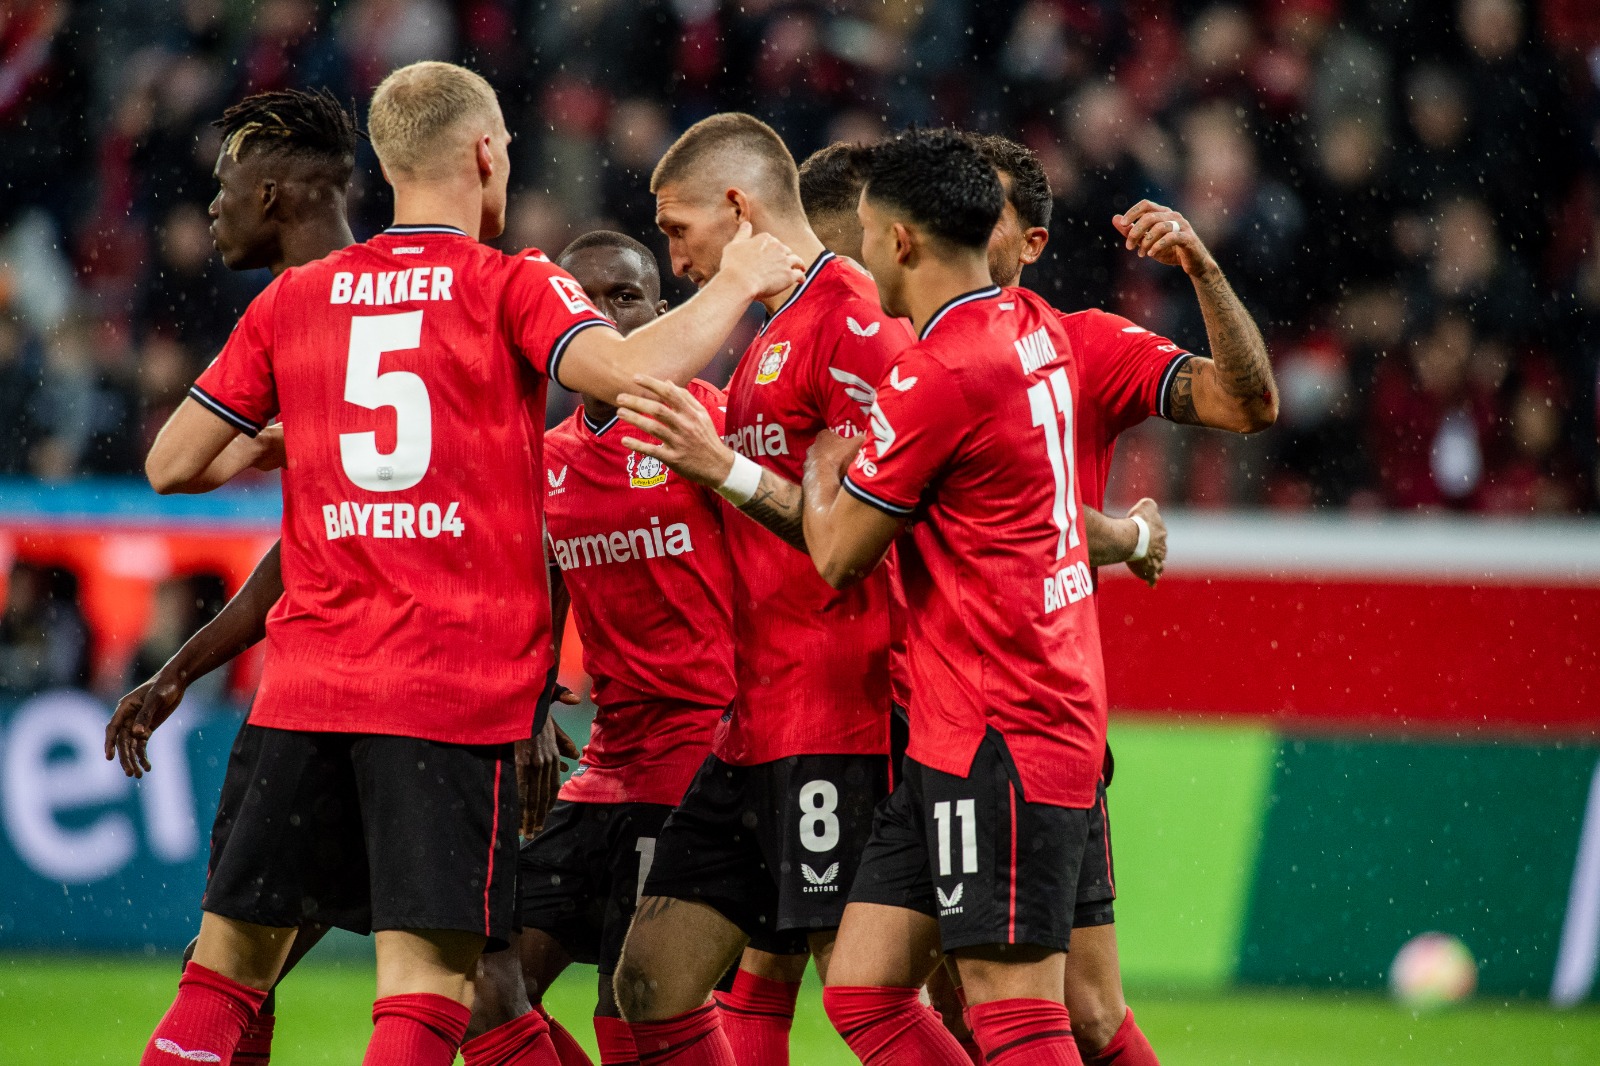 Bayer Leverkusen vs. FC Köln preview: Who will prevail in the Rhine derby?